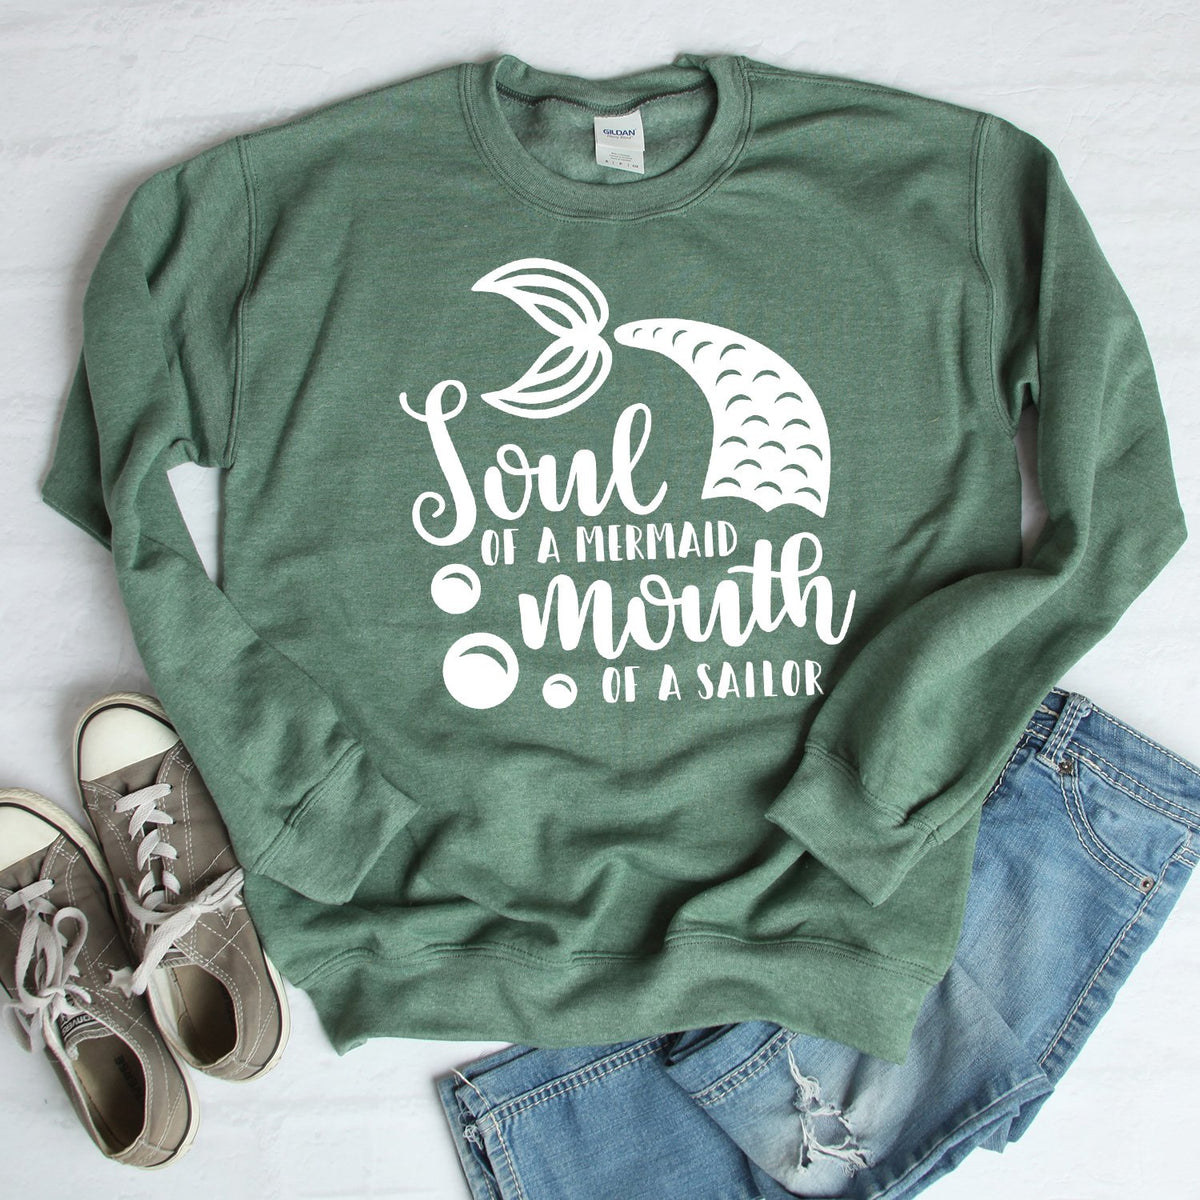 Soul of A Mermaid Mouth of A Sailor - Long Sleeve Heavy Crewneck Sweatshirt